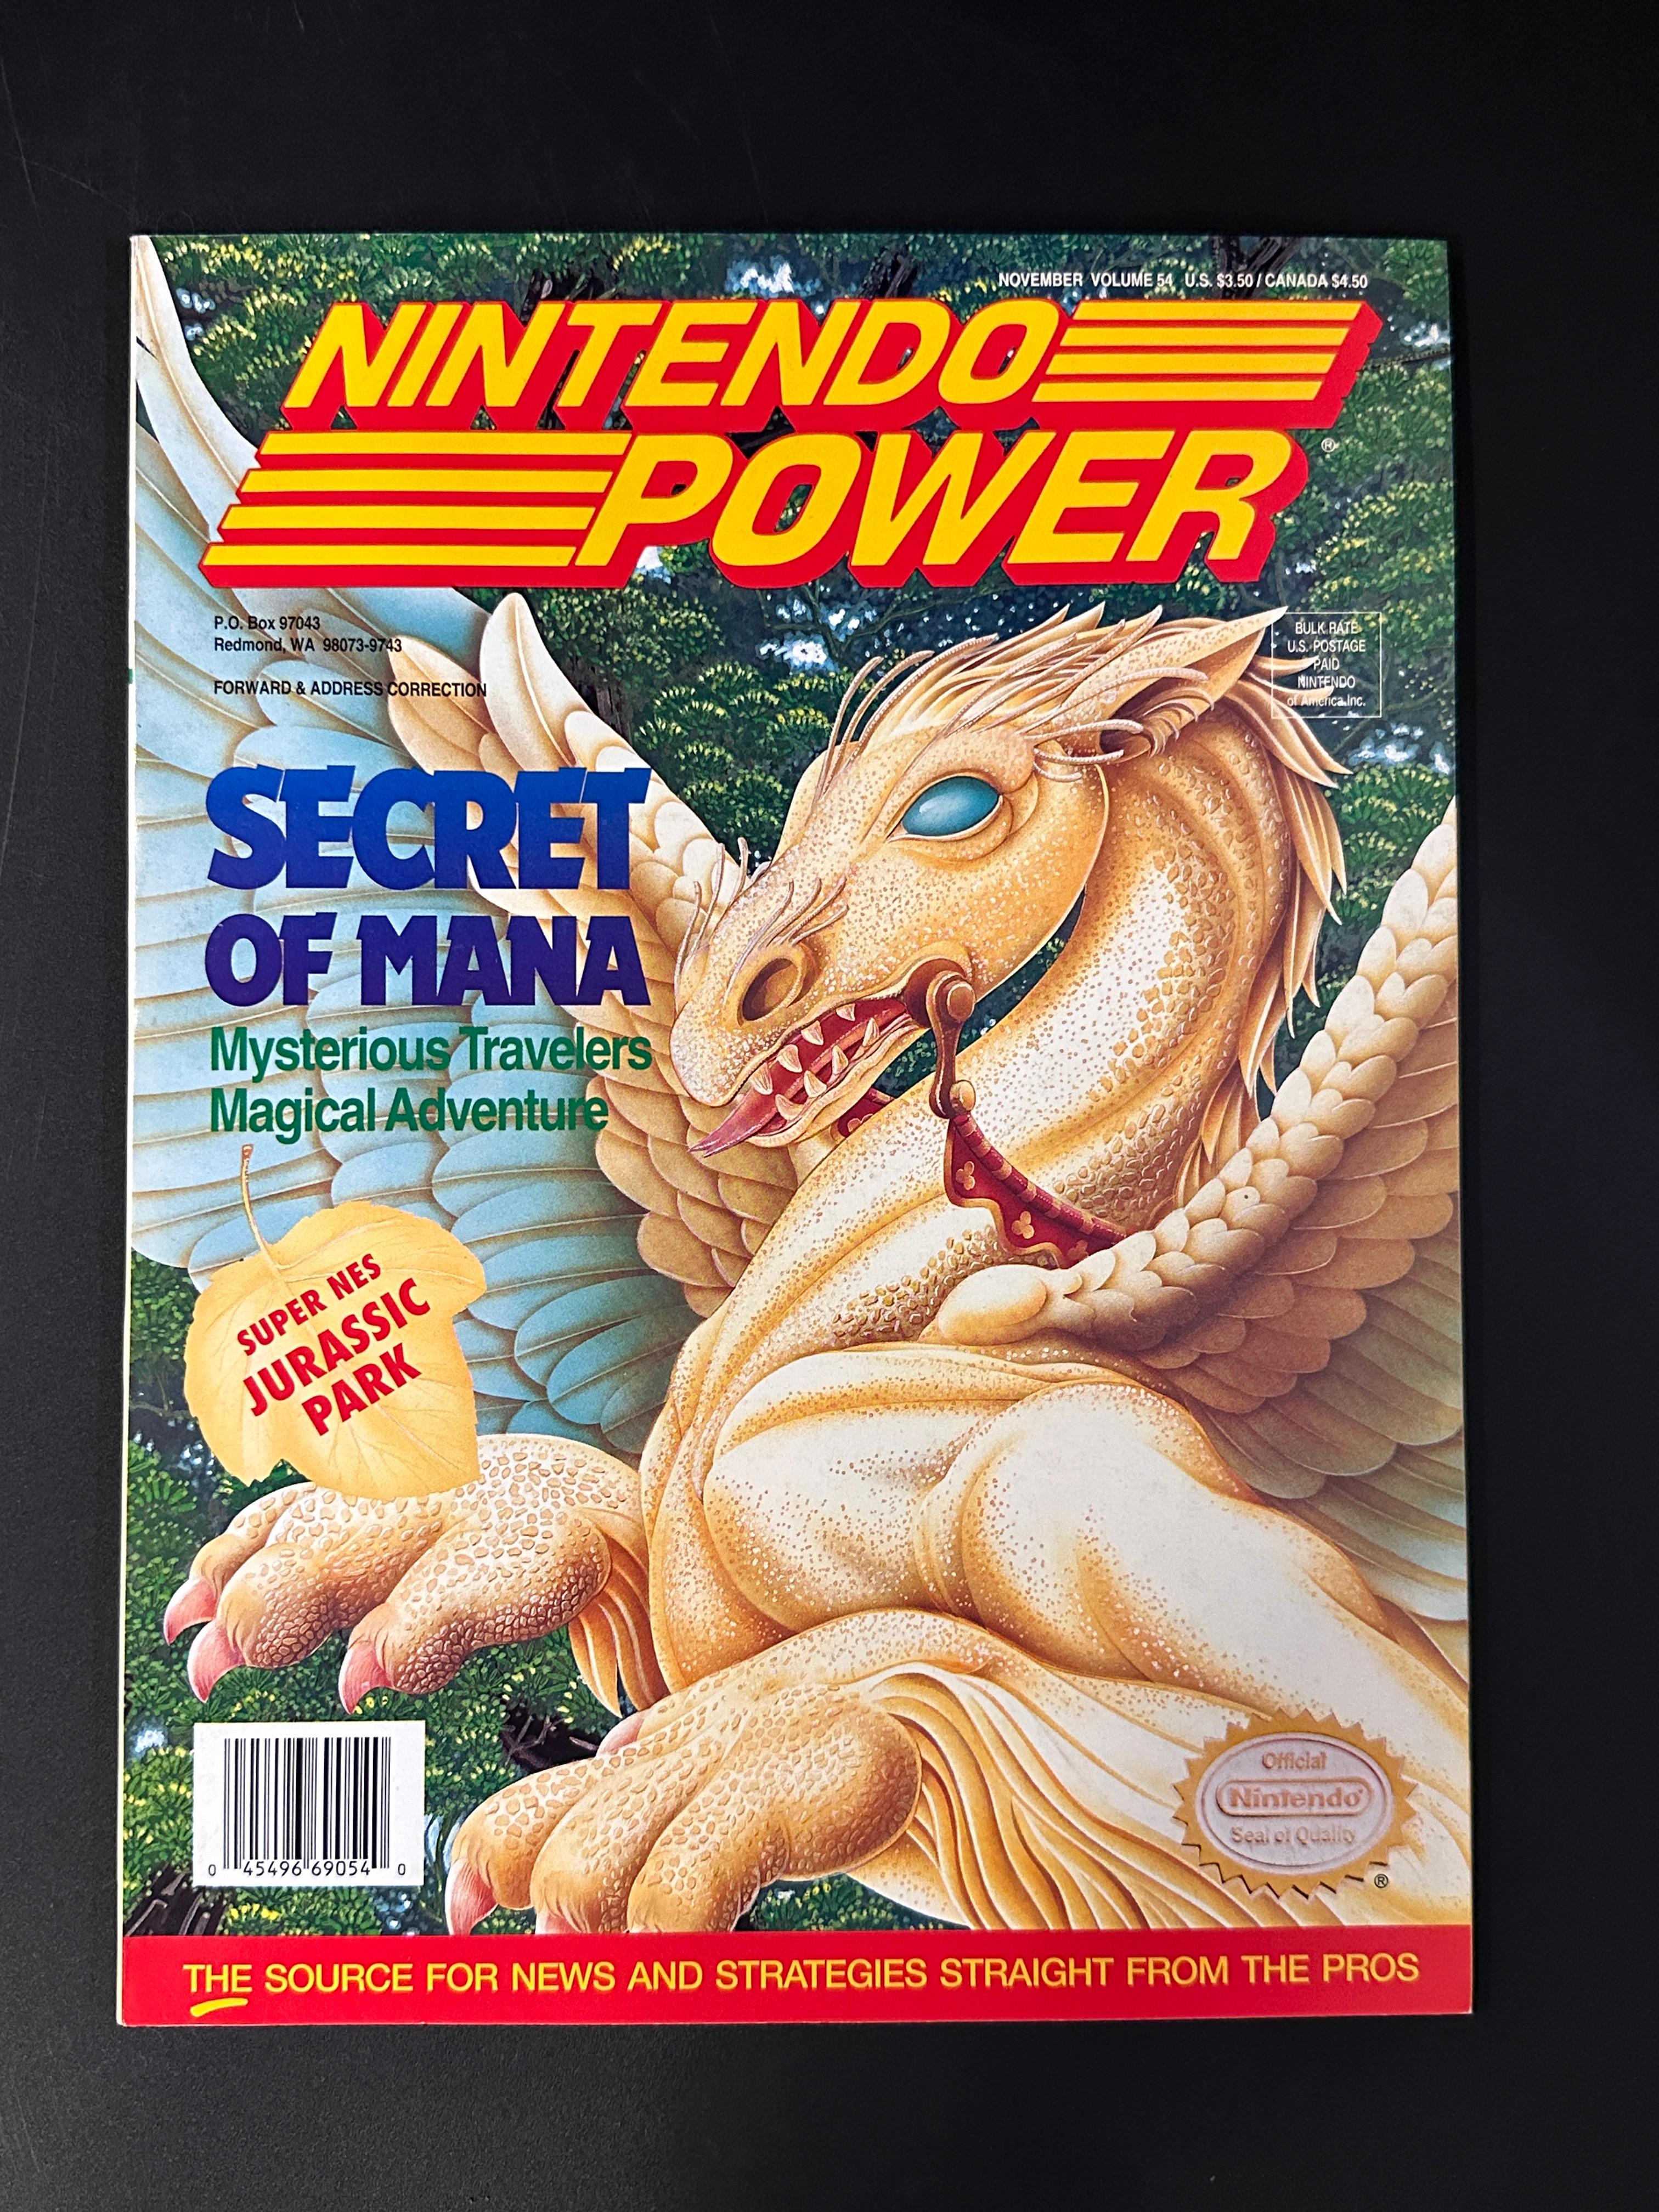 (7) Nintendo Power